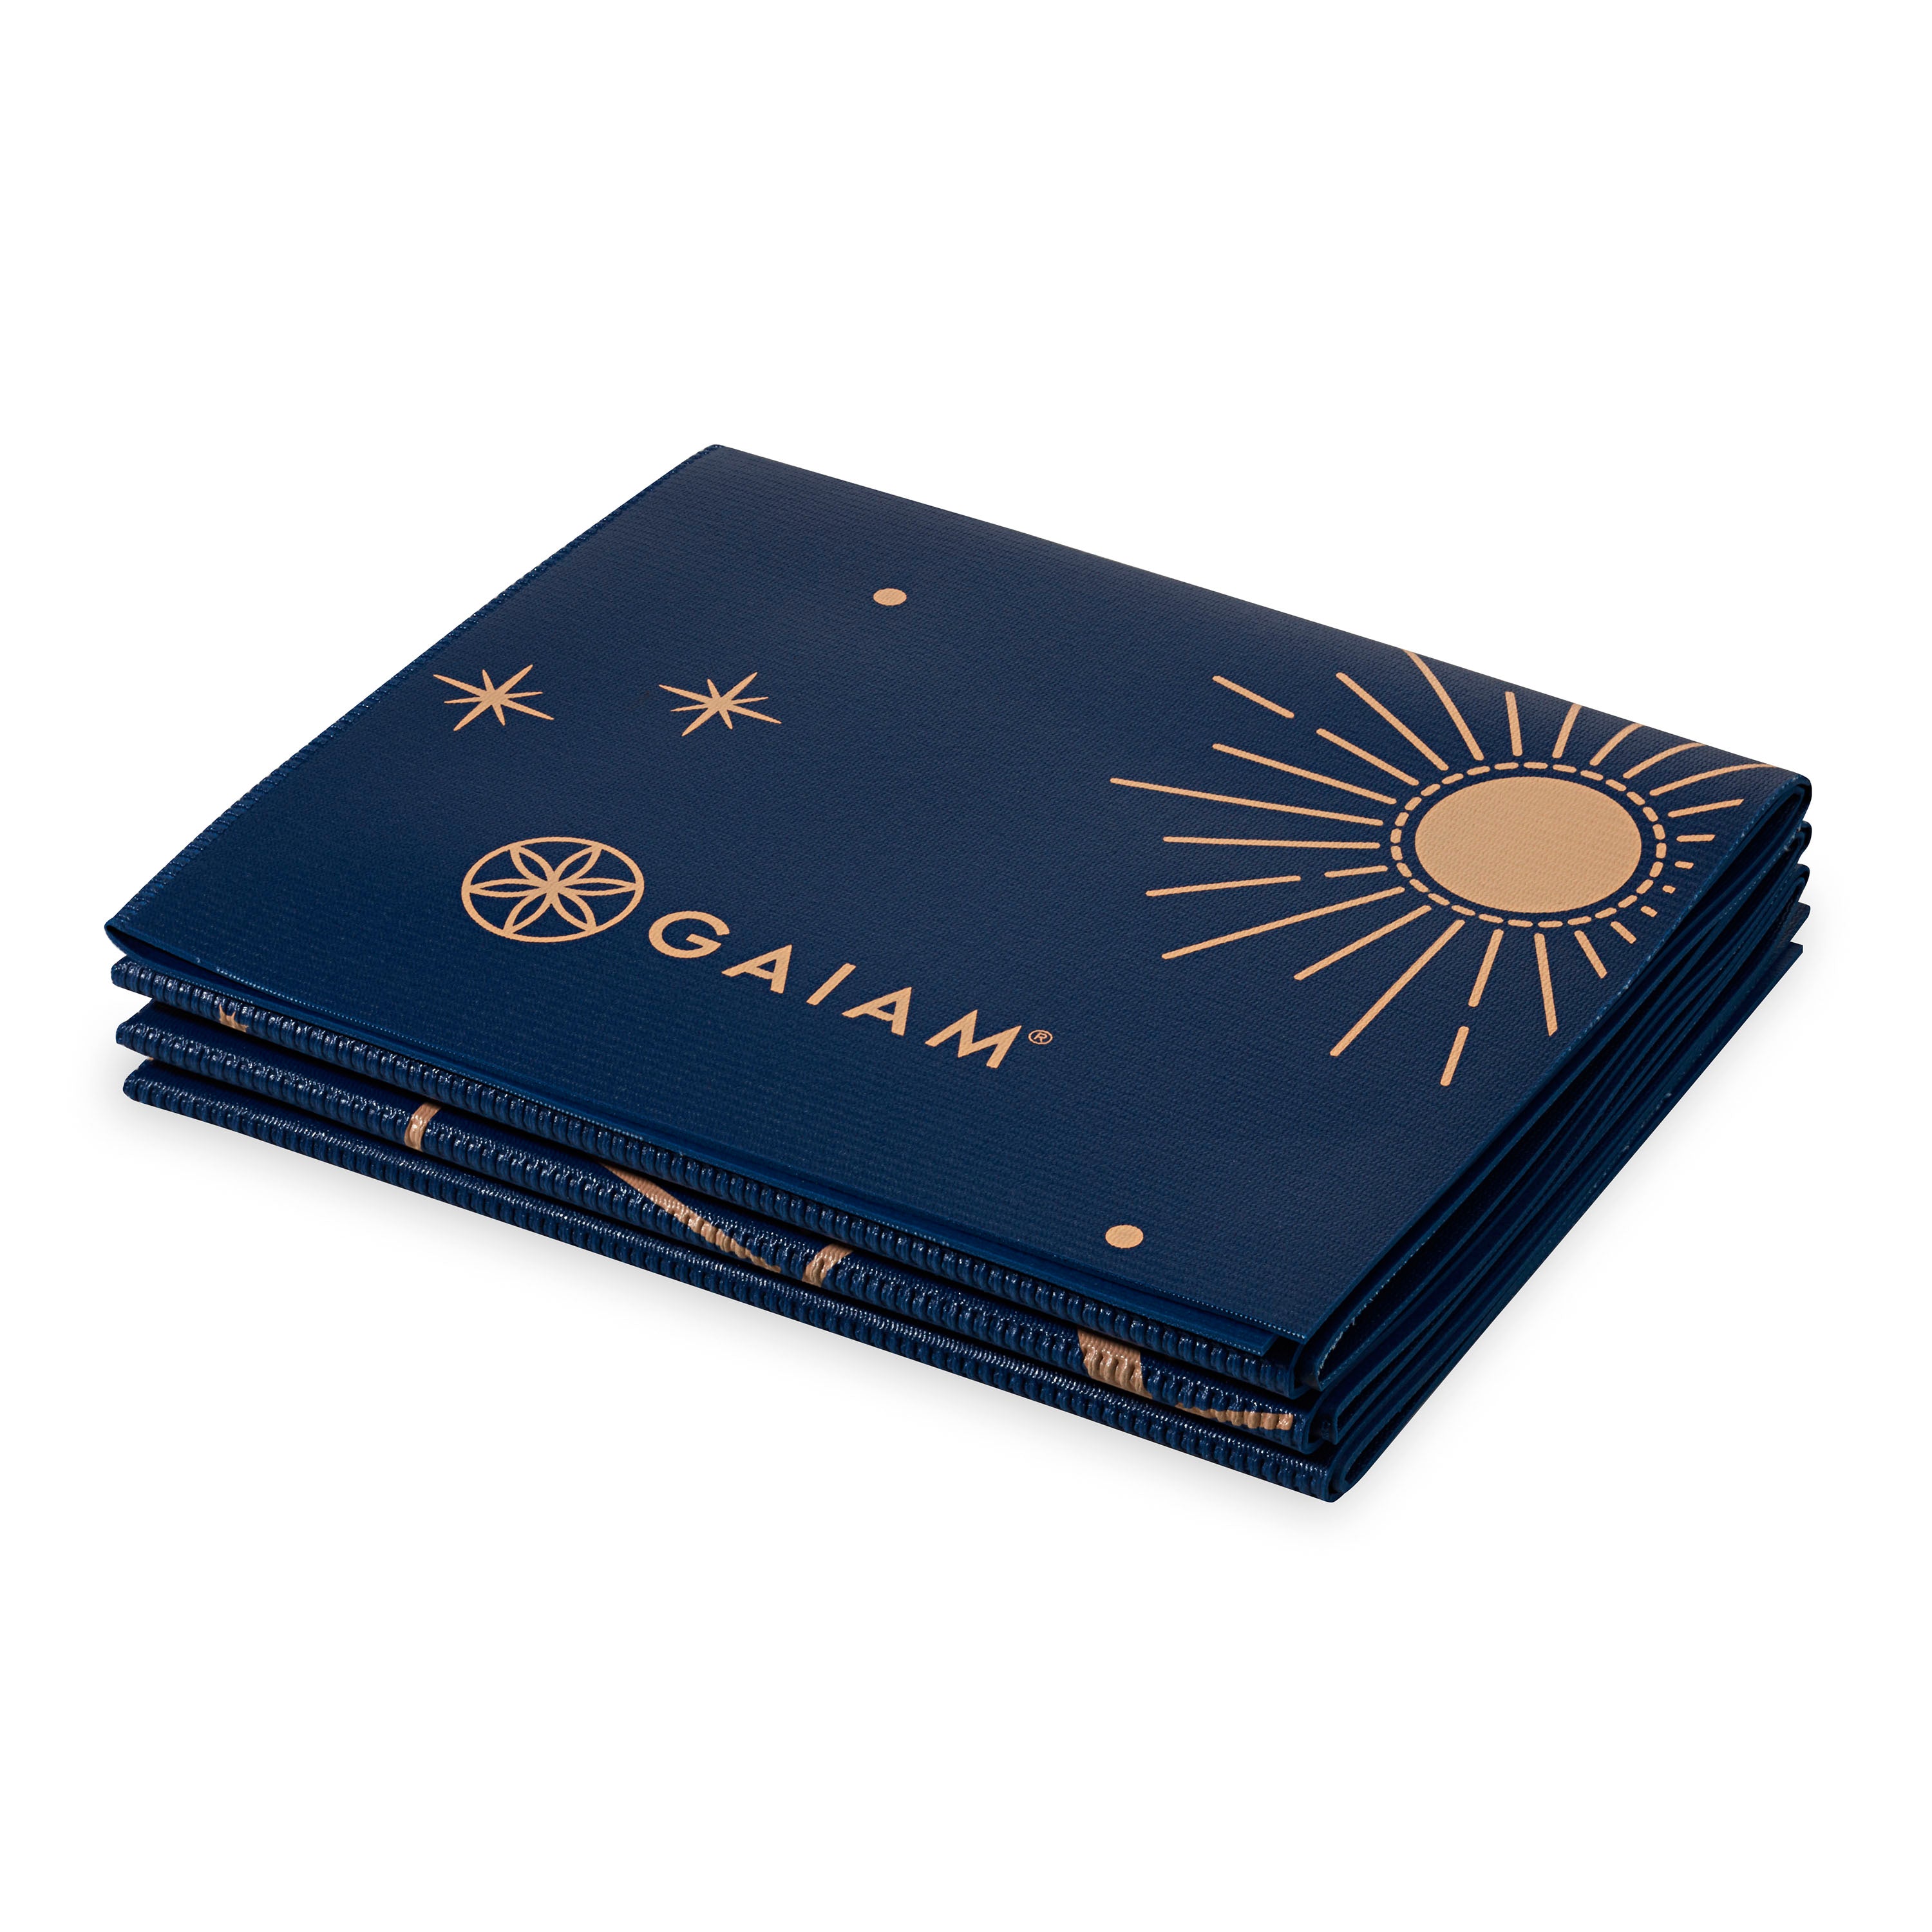 Midsummer Nights Foldable Yoga Mat - Gaiam